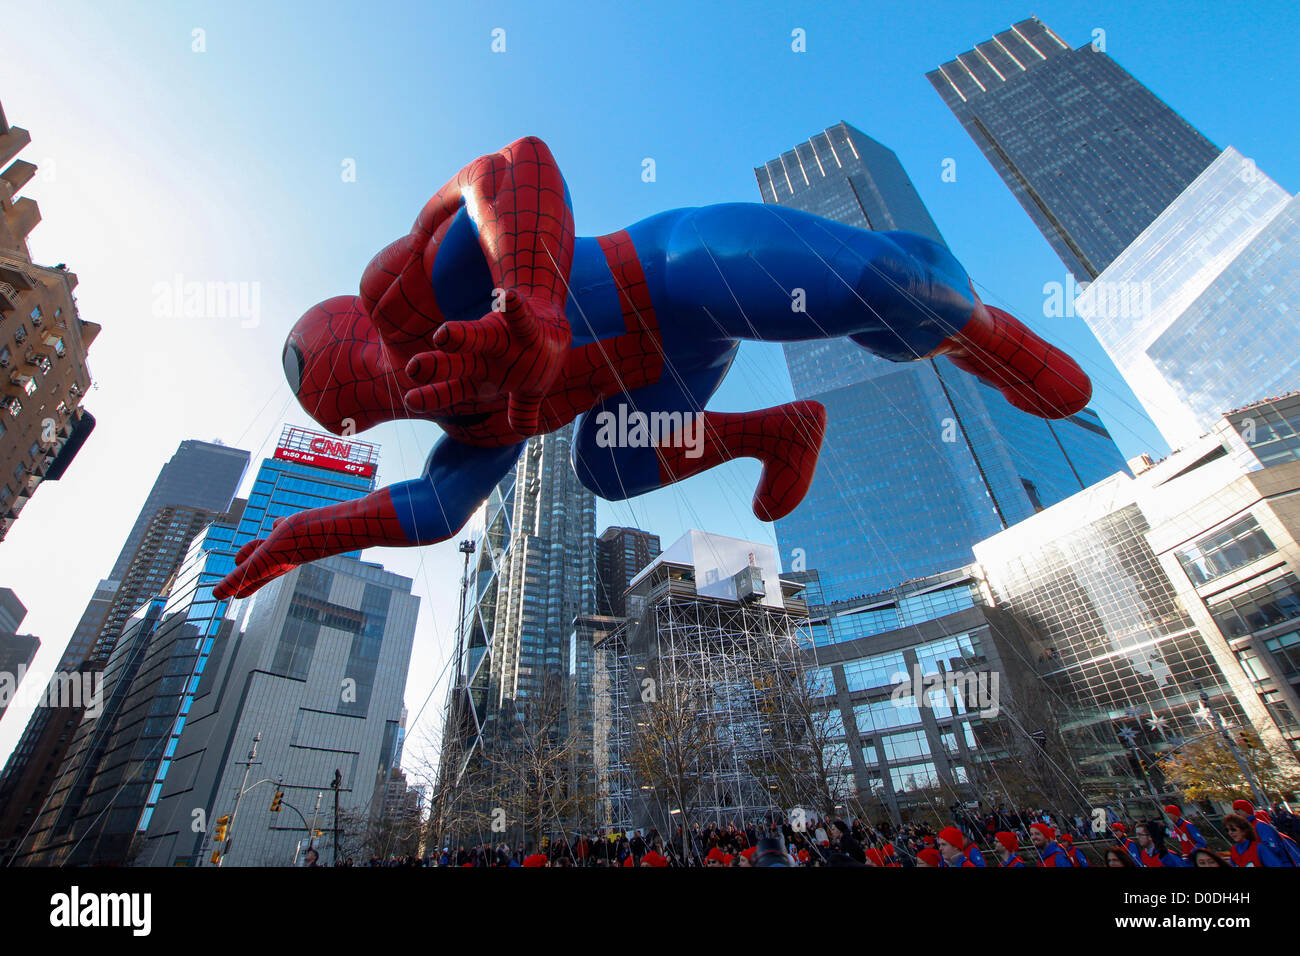 Spiderman balloon passes through Columbs Circle during Macy's Thanksgiving Day Parade in New York City, on Thursday, Nov. 22, 2012. Stock Photo